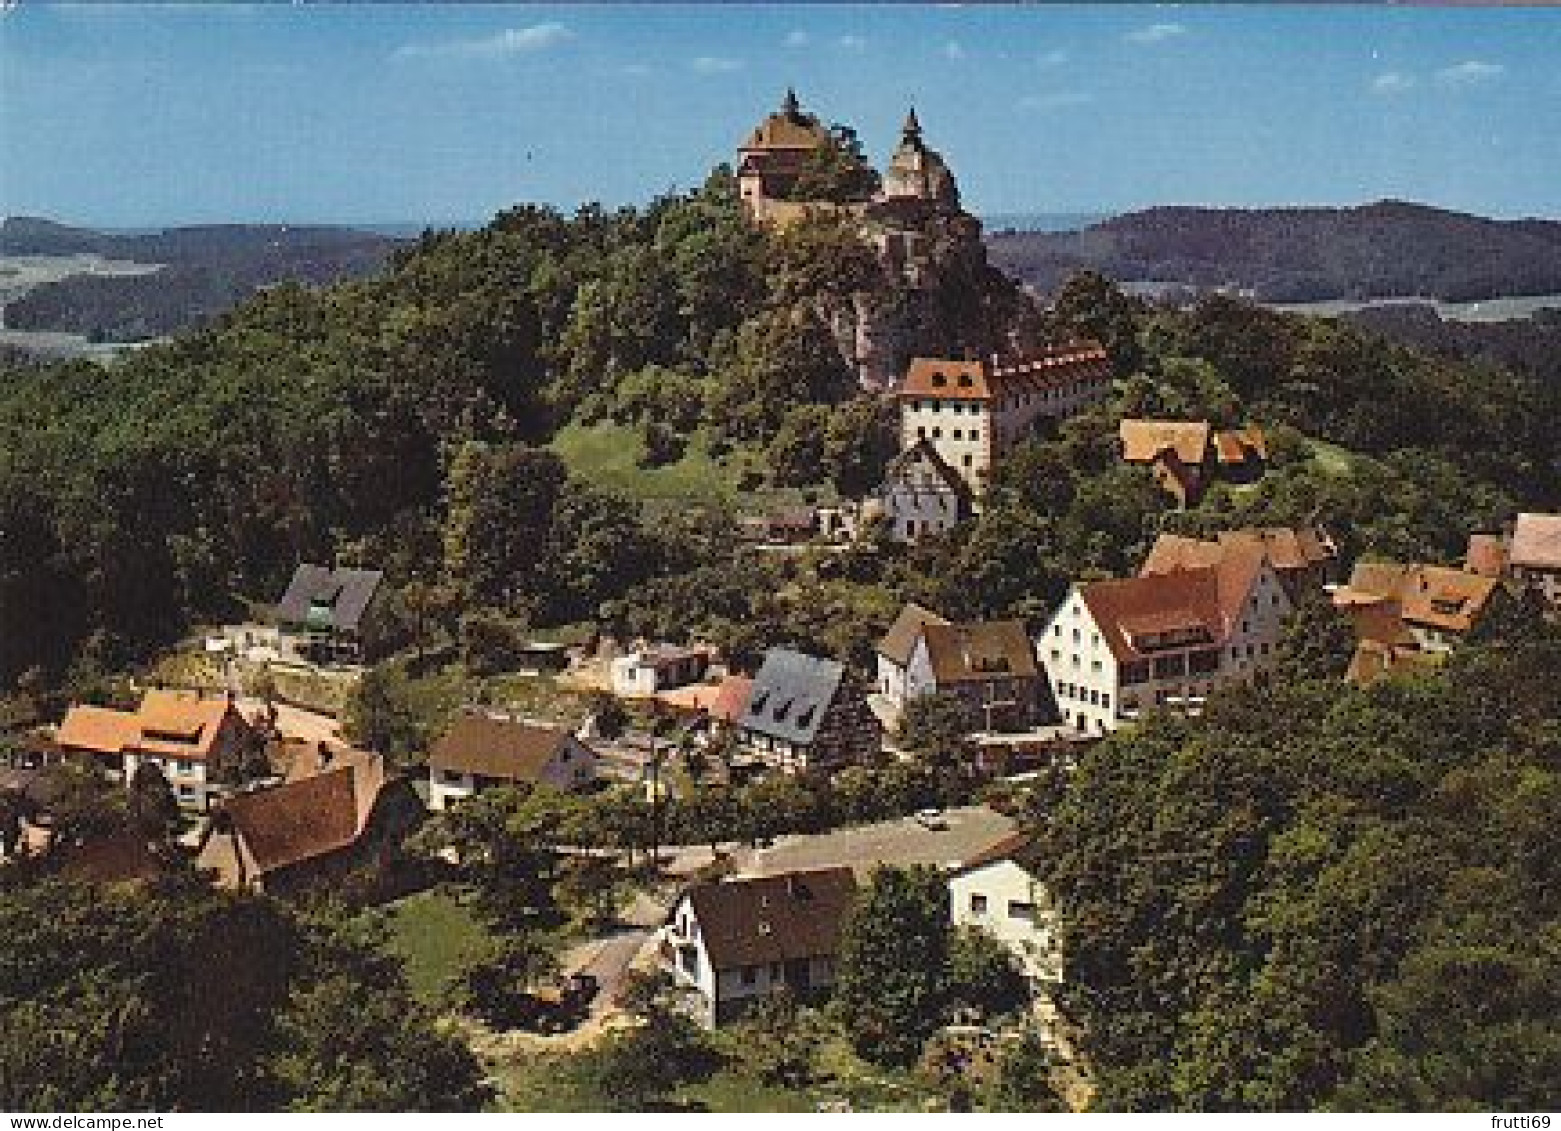 AK 170776 GERMANY - Burg Hohenstein Bei Hersbruck - Gasthof-Pension Felsburg - Hersbruck